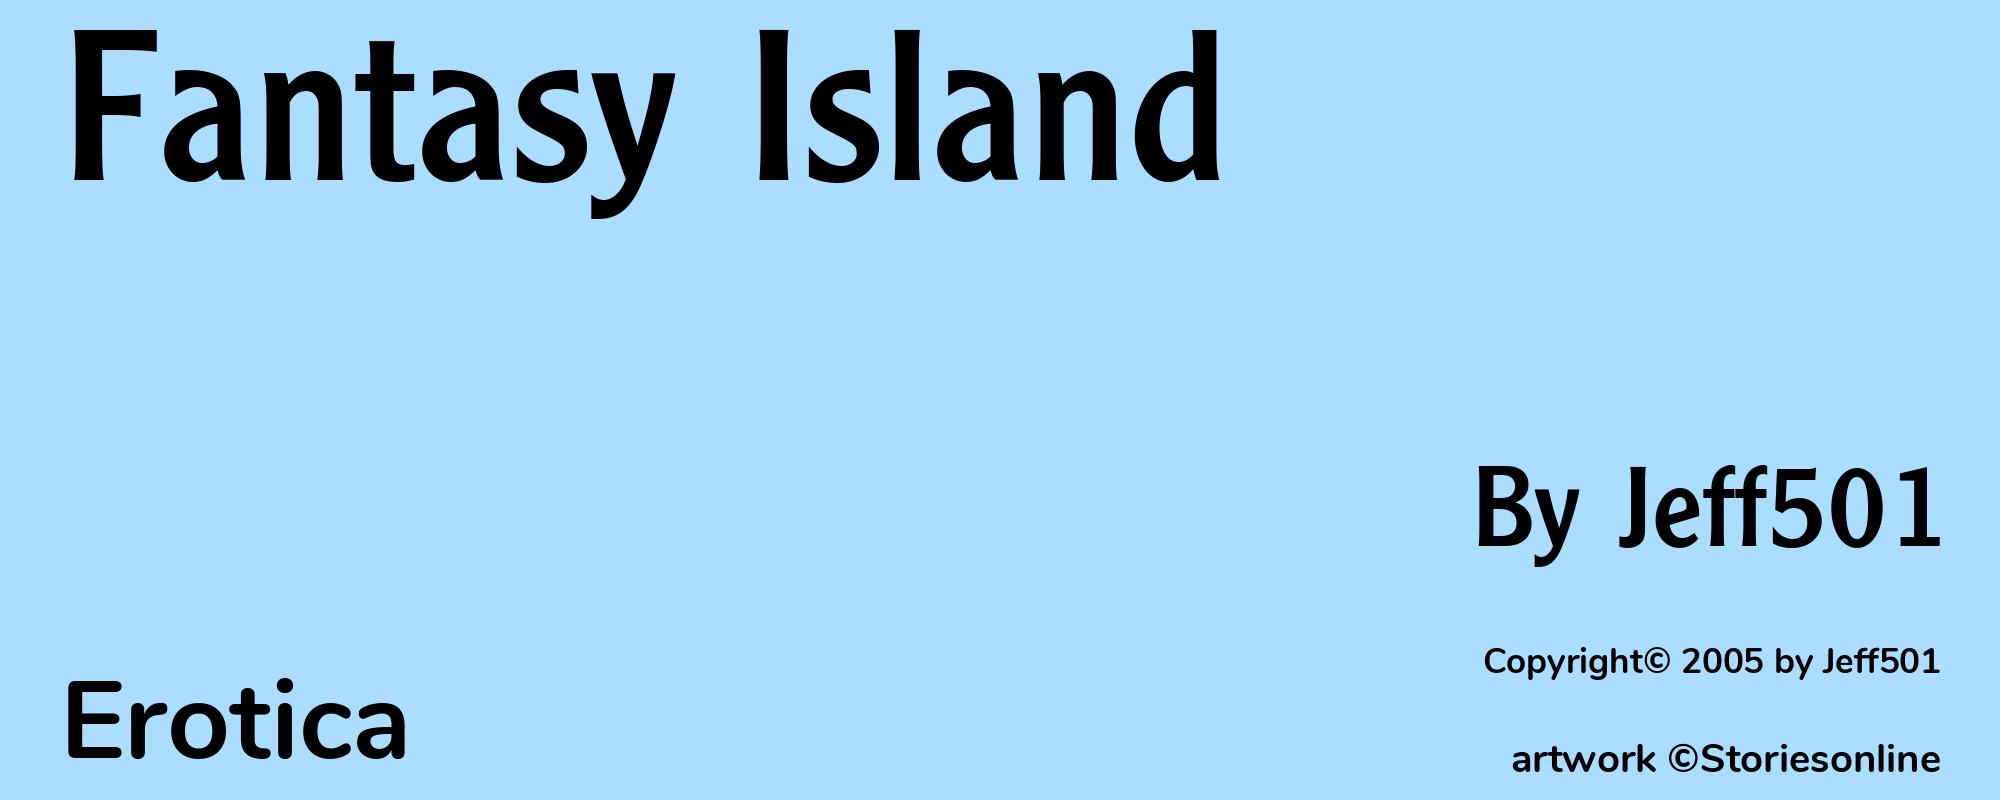 Fantasy Island - Cover